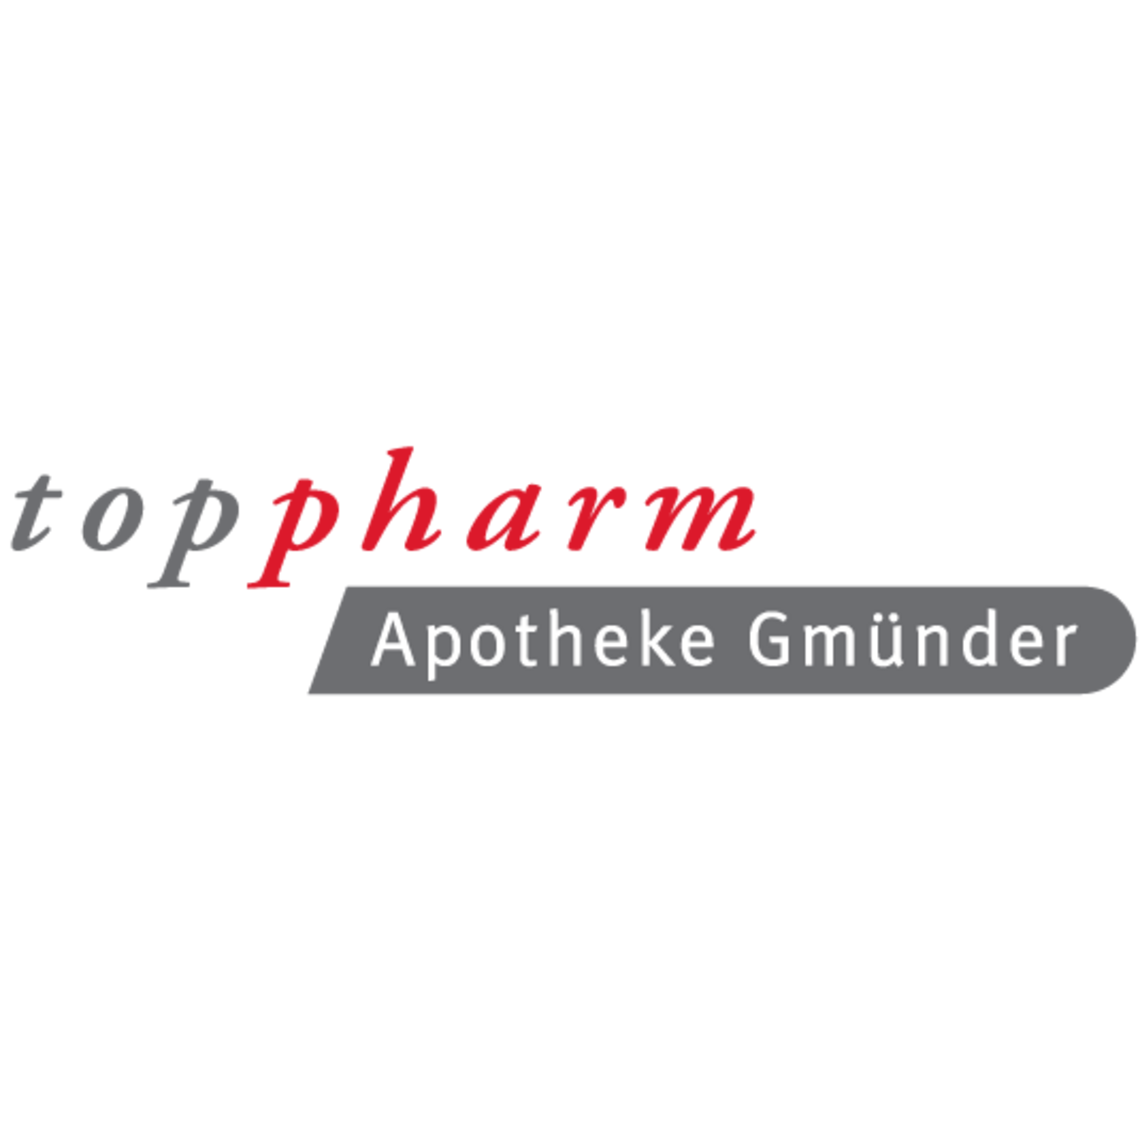 Toppharm Apotheke Gmünder Logo